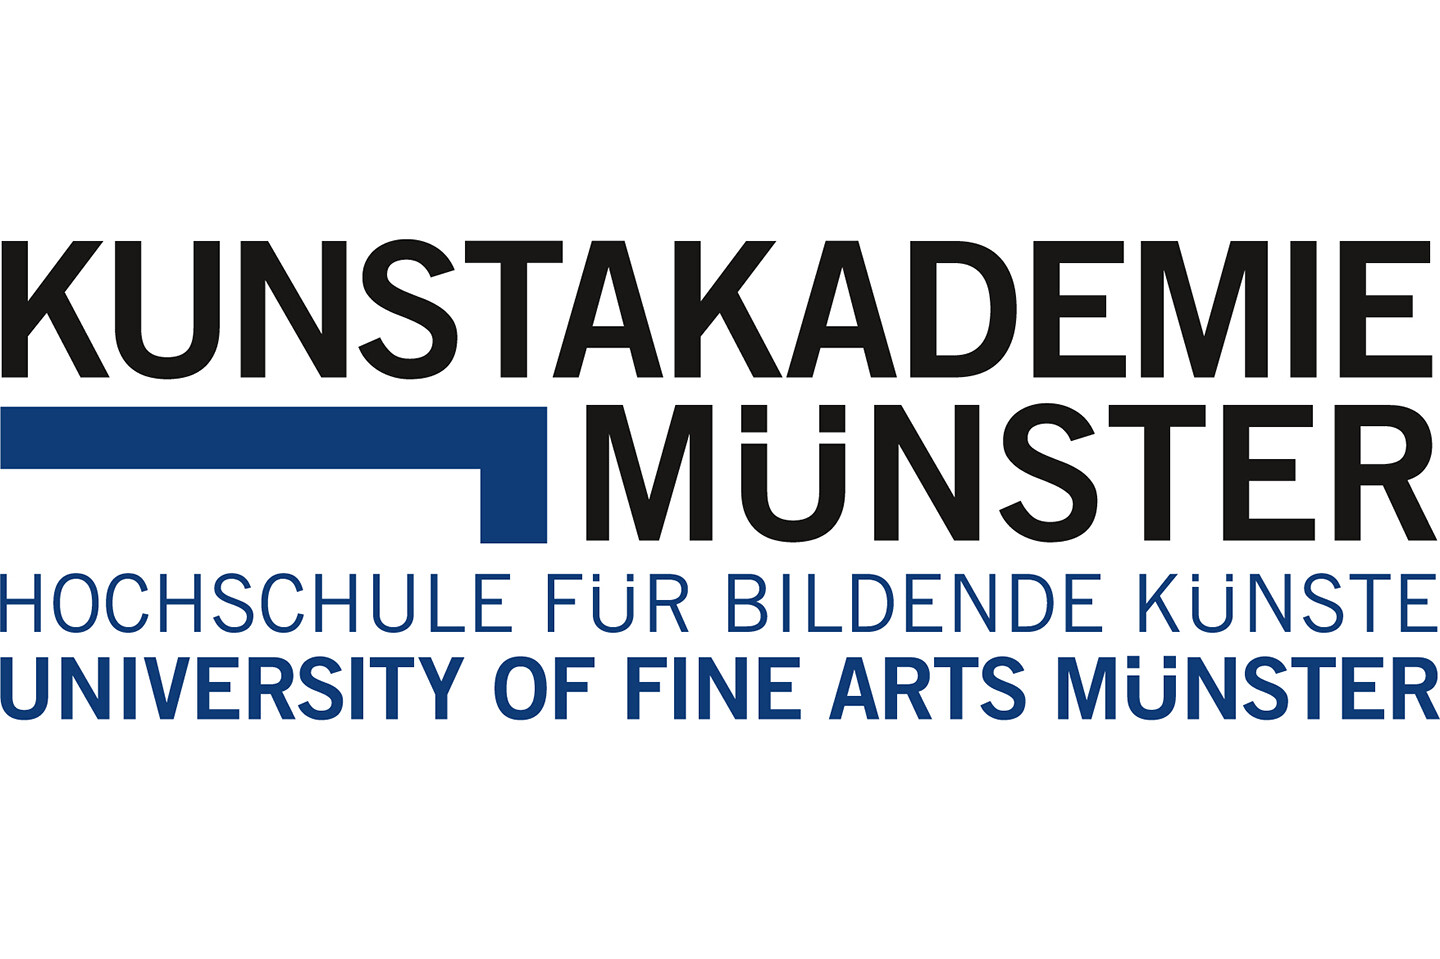 University of Fine Arts Munster Germany